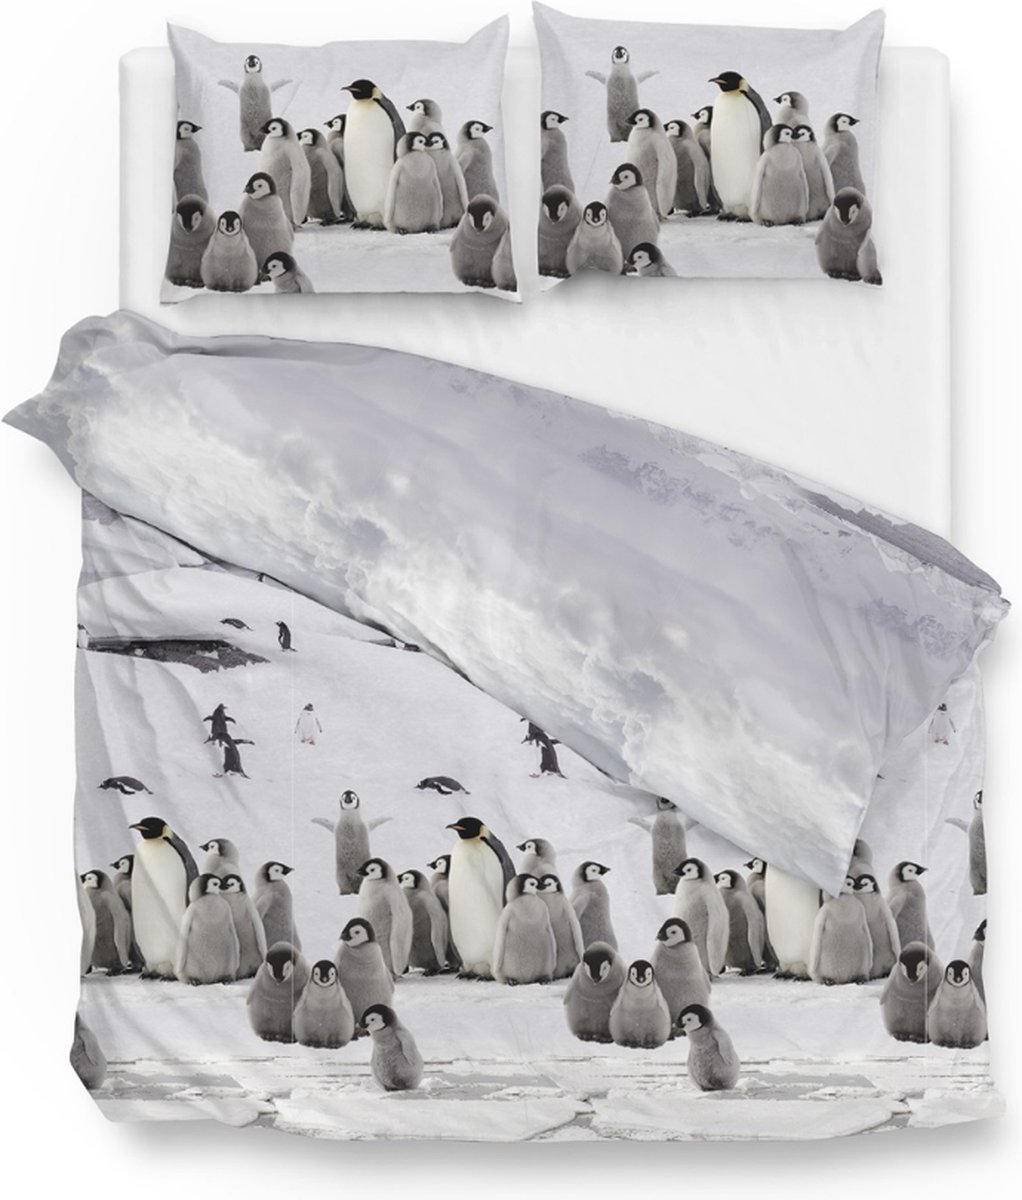 Warme flanel dekbedovertrek Ice Pinguins - extra breed (260x200/220) - hoogwaardig en zacht - ideaal tegen de kou